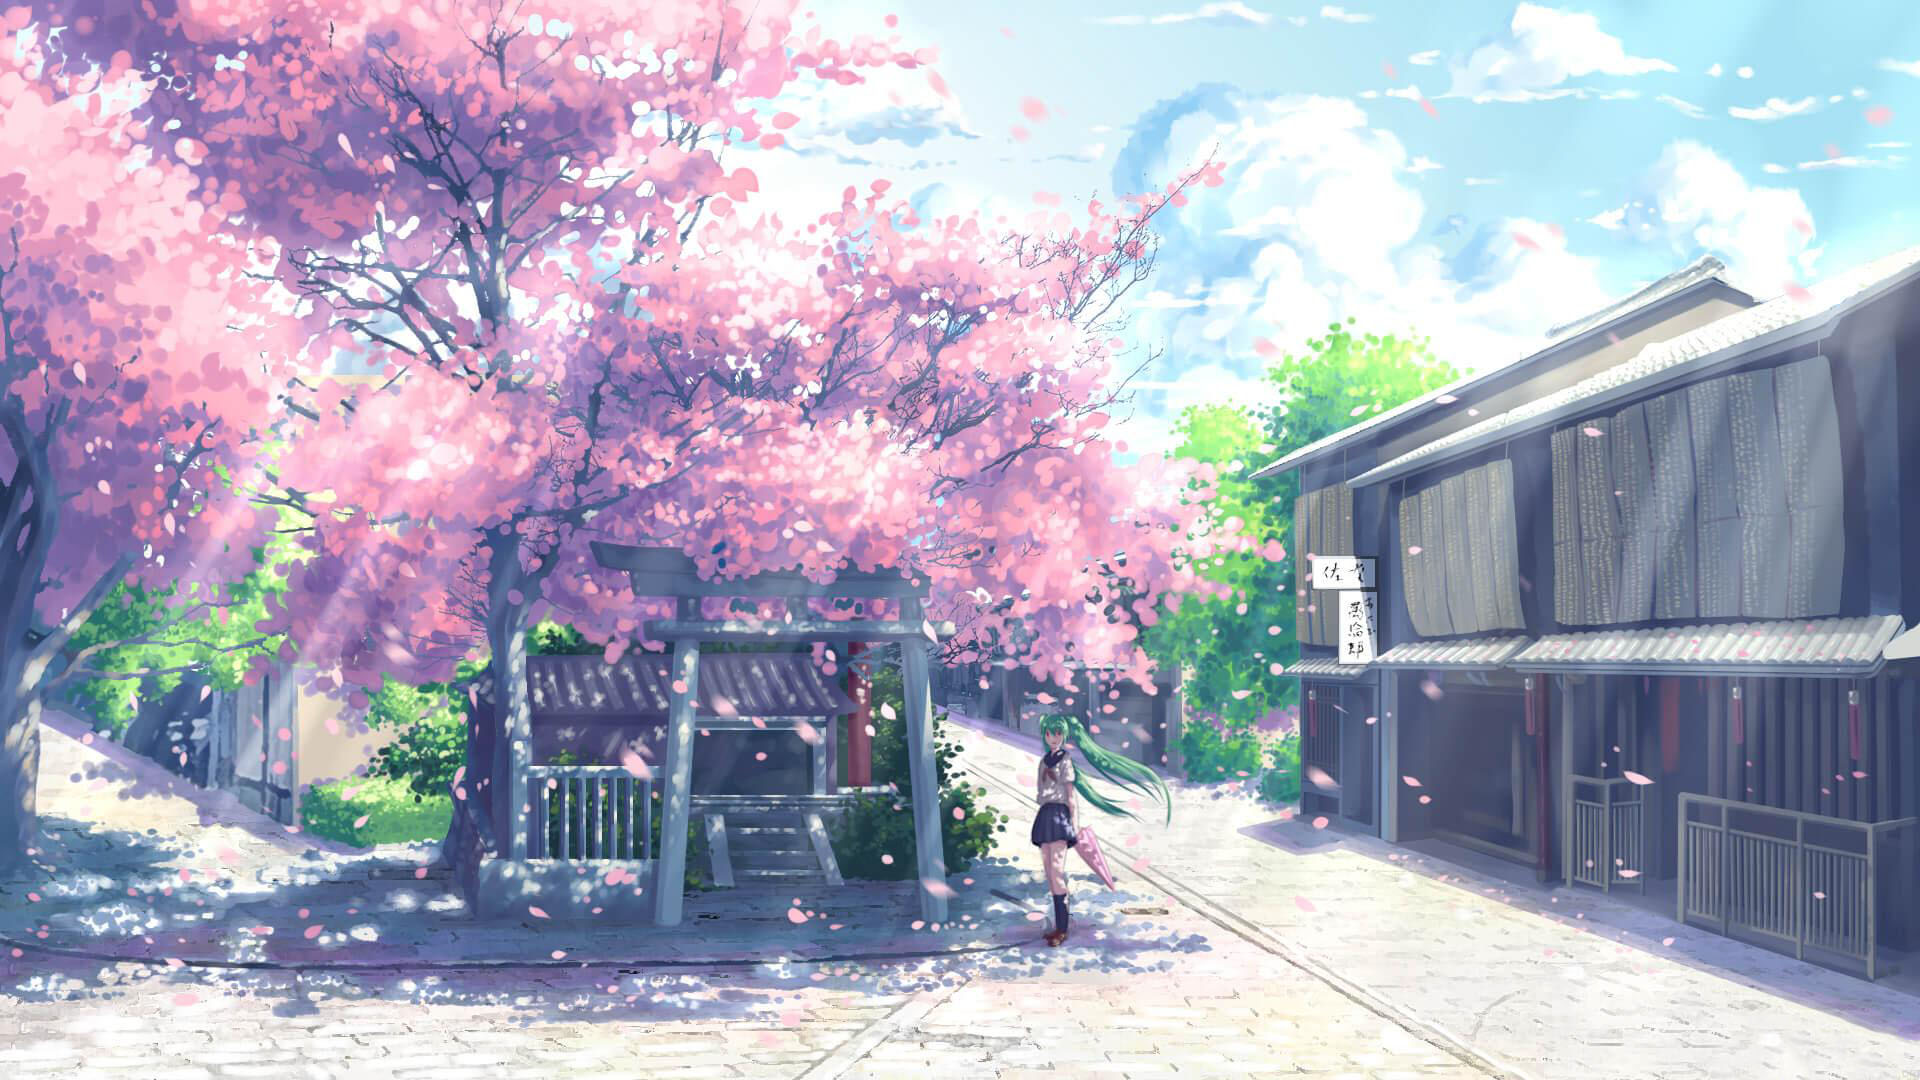 Cam, hồng, đường phố, làng quê, nhật bản | Beautiful landscape wallpaper,  Scenery wallpaper, Landscape wallpaper